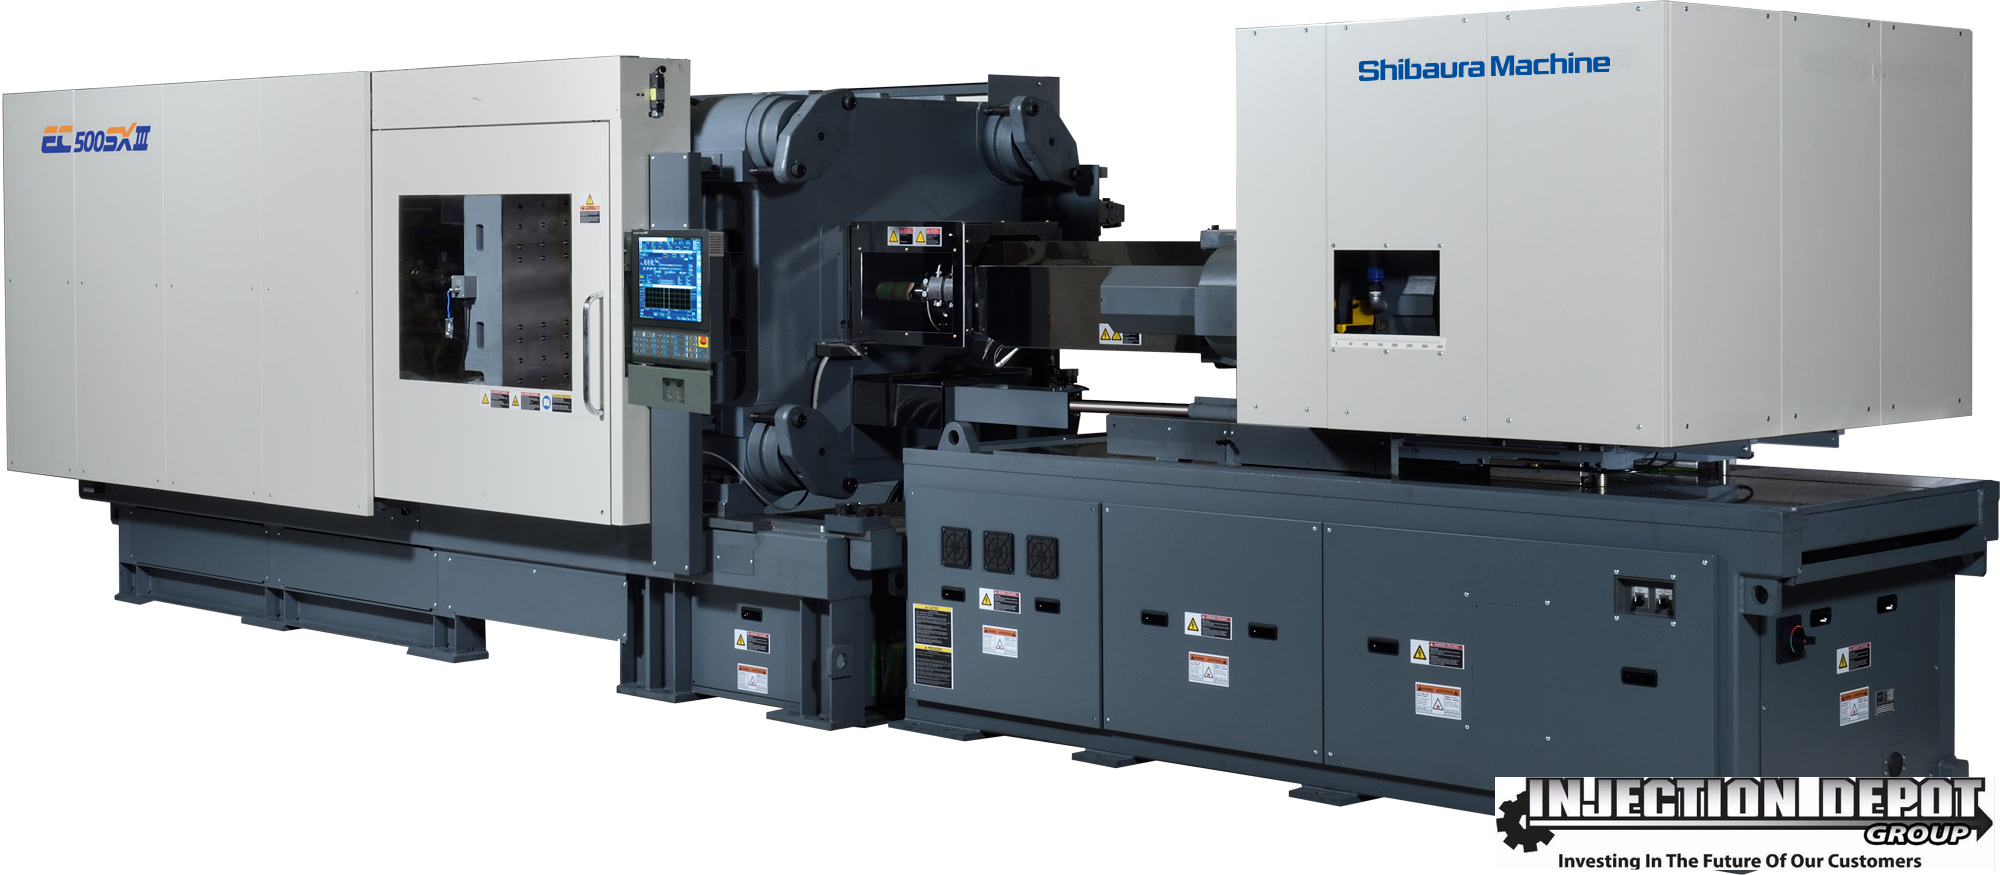 Shibaura Machine EC500SXIIIV70-i36AT Horizontal Injection Moulding Machines | INJECTION DEPOT GROUP